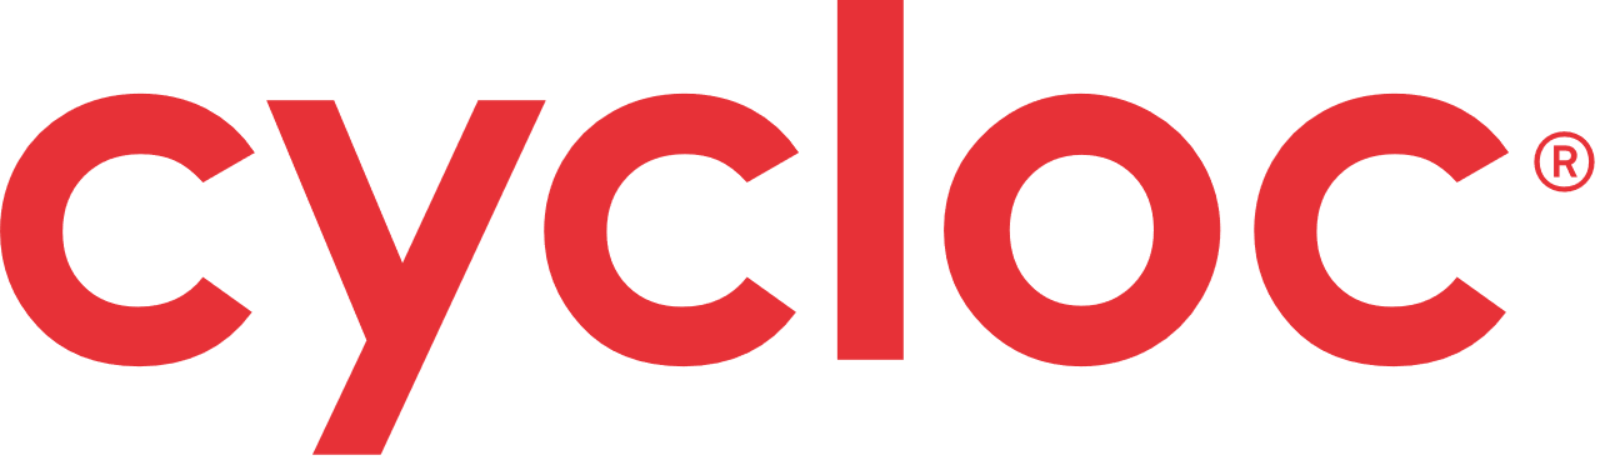 Logo Cycloc